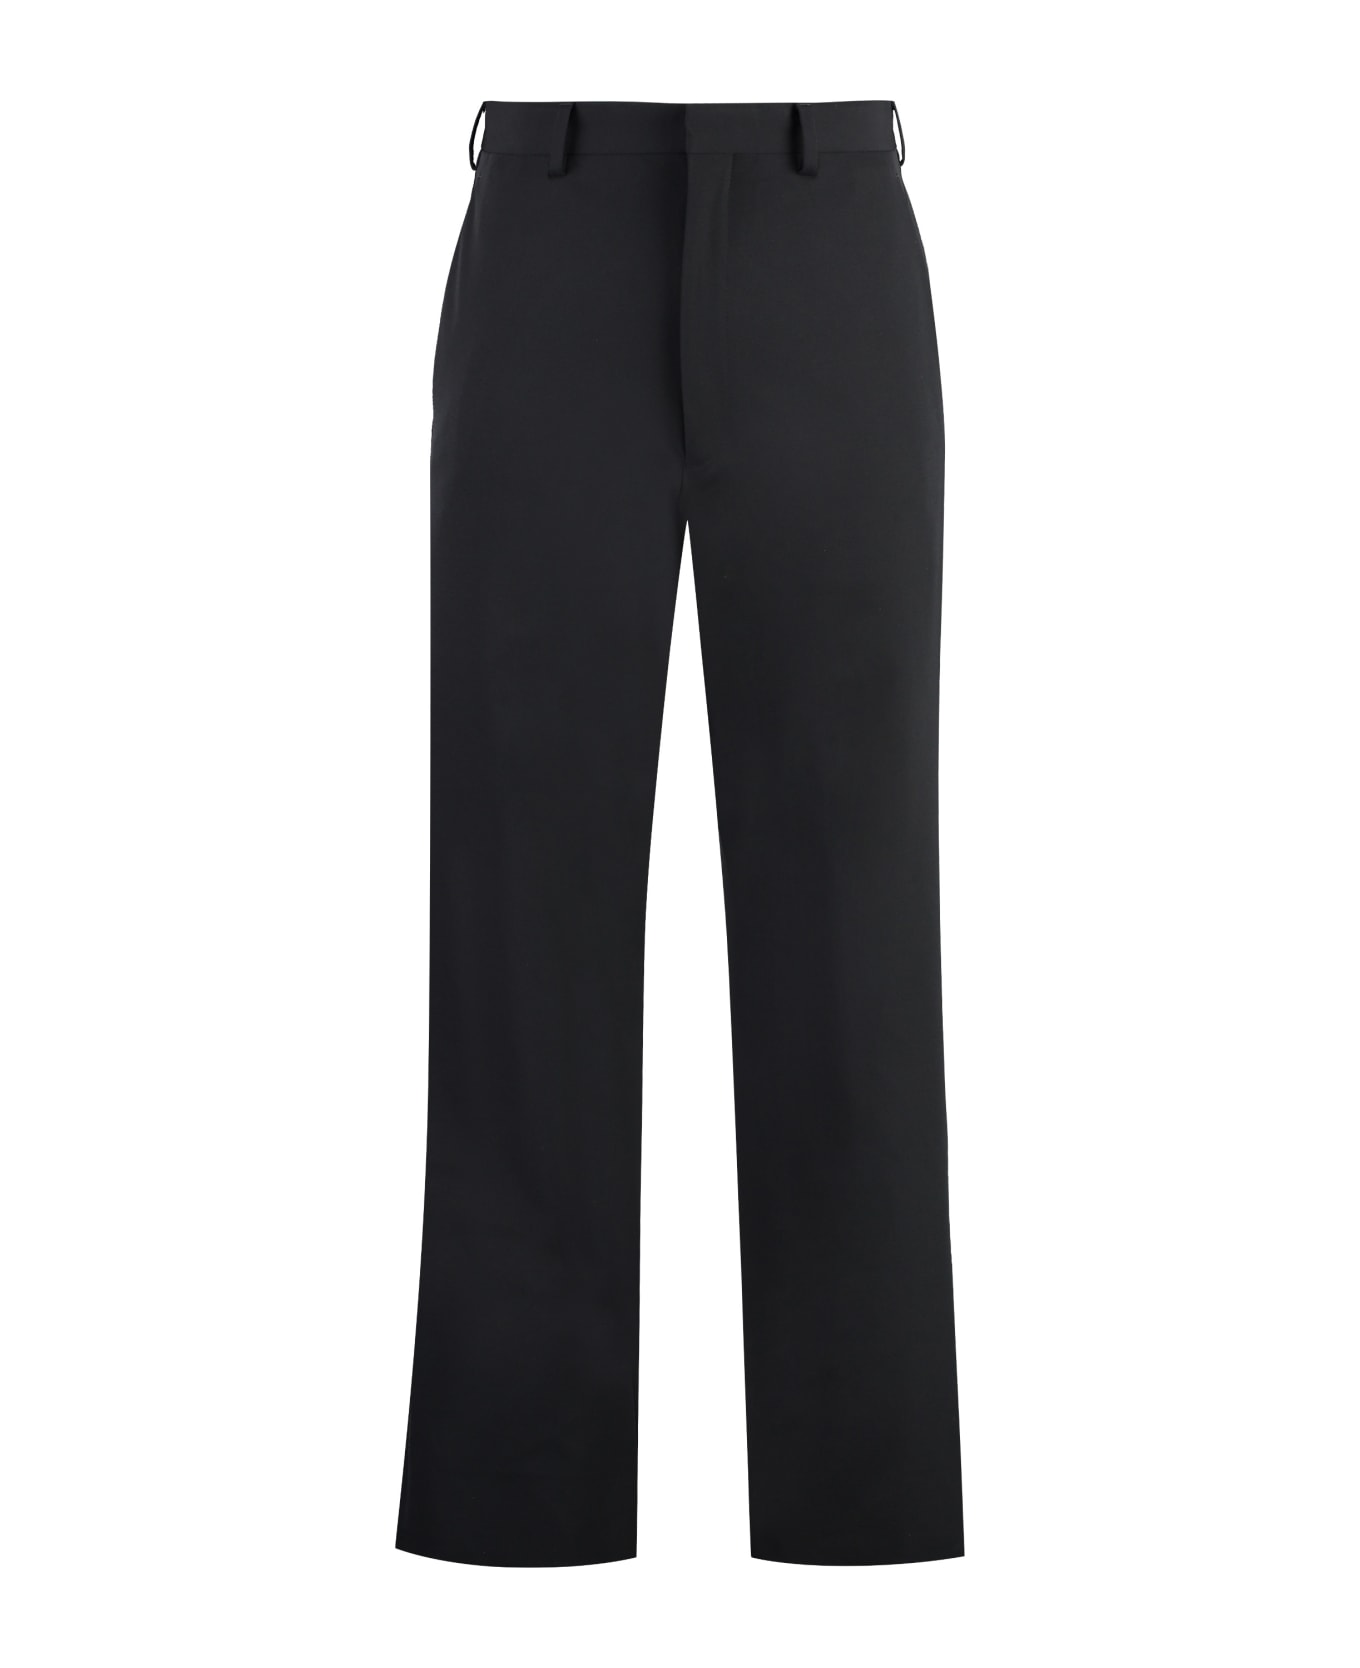 Prada Technical Fabric Pants - black